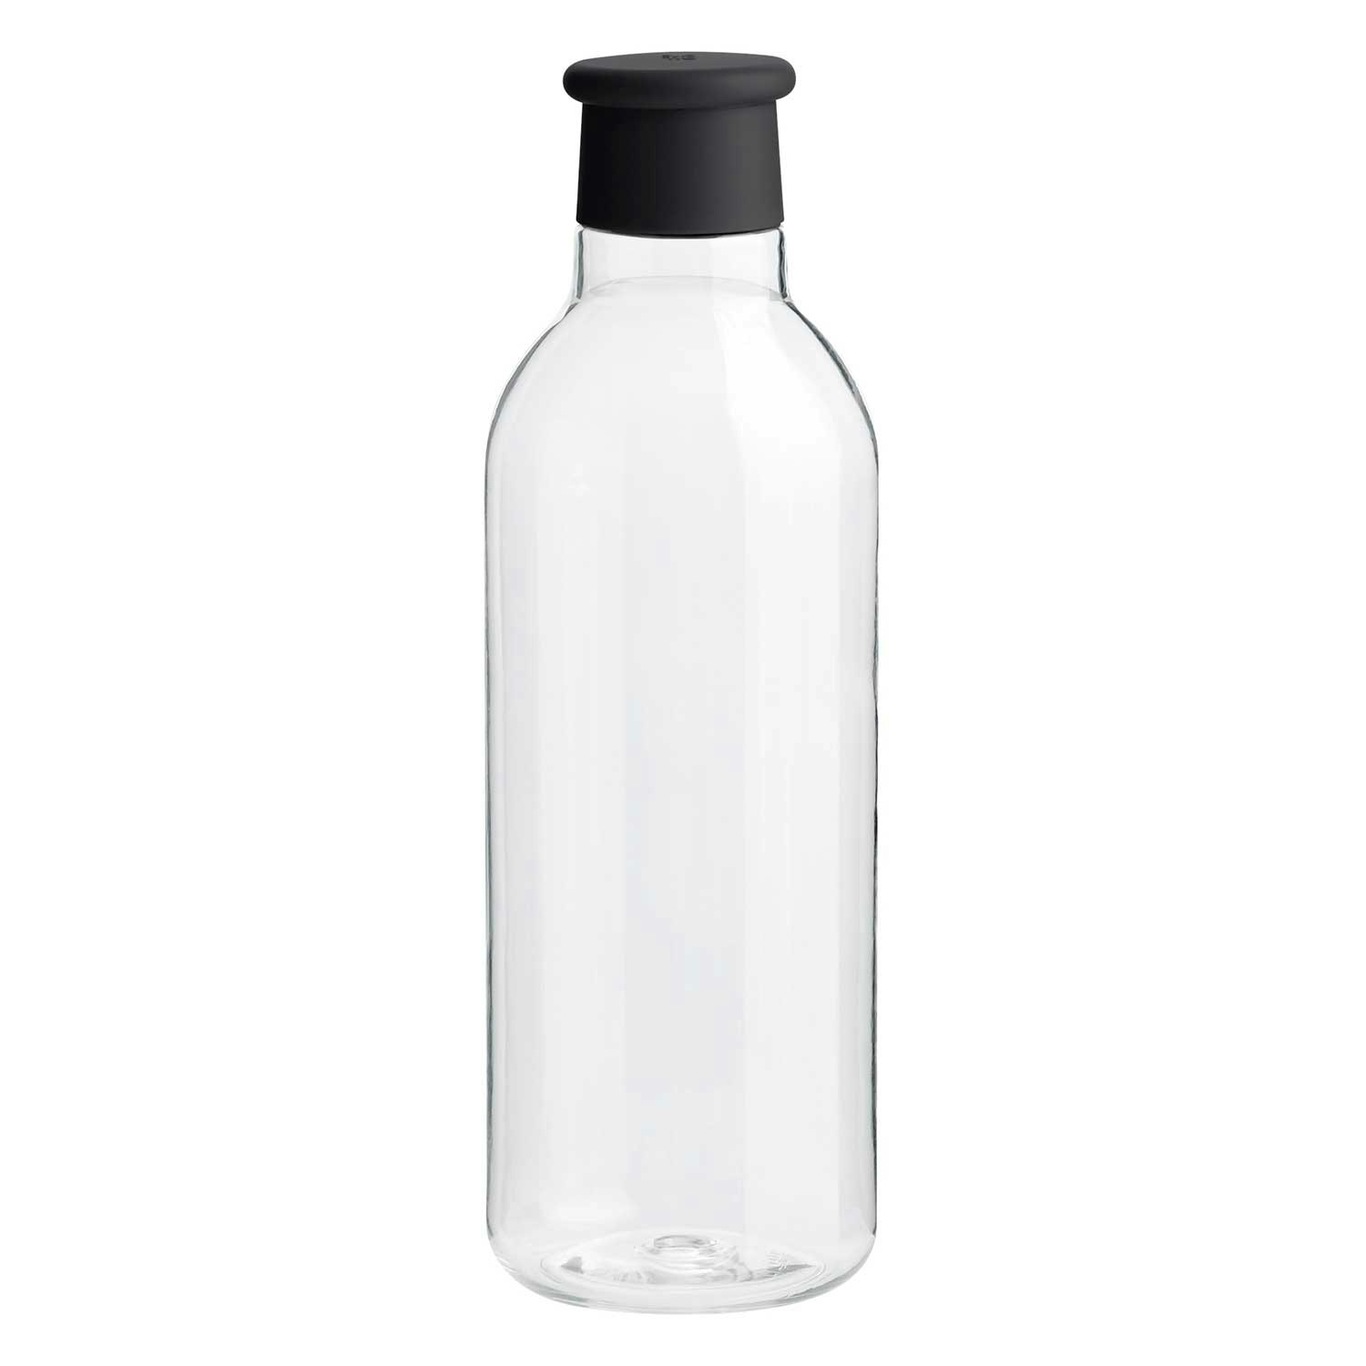 Stig Water Bottle 55 cl, Green - Sagaform @ RoyalDesign